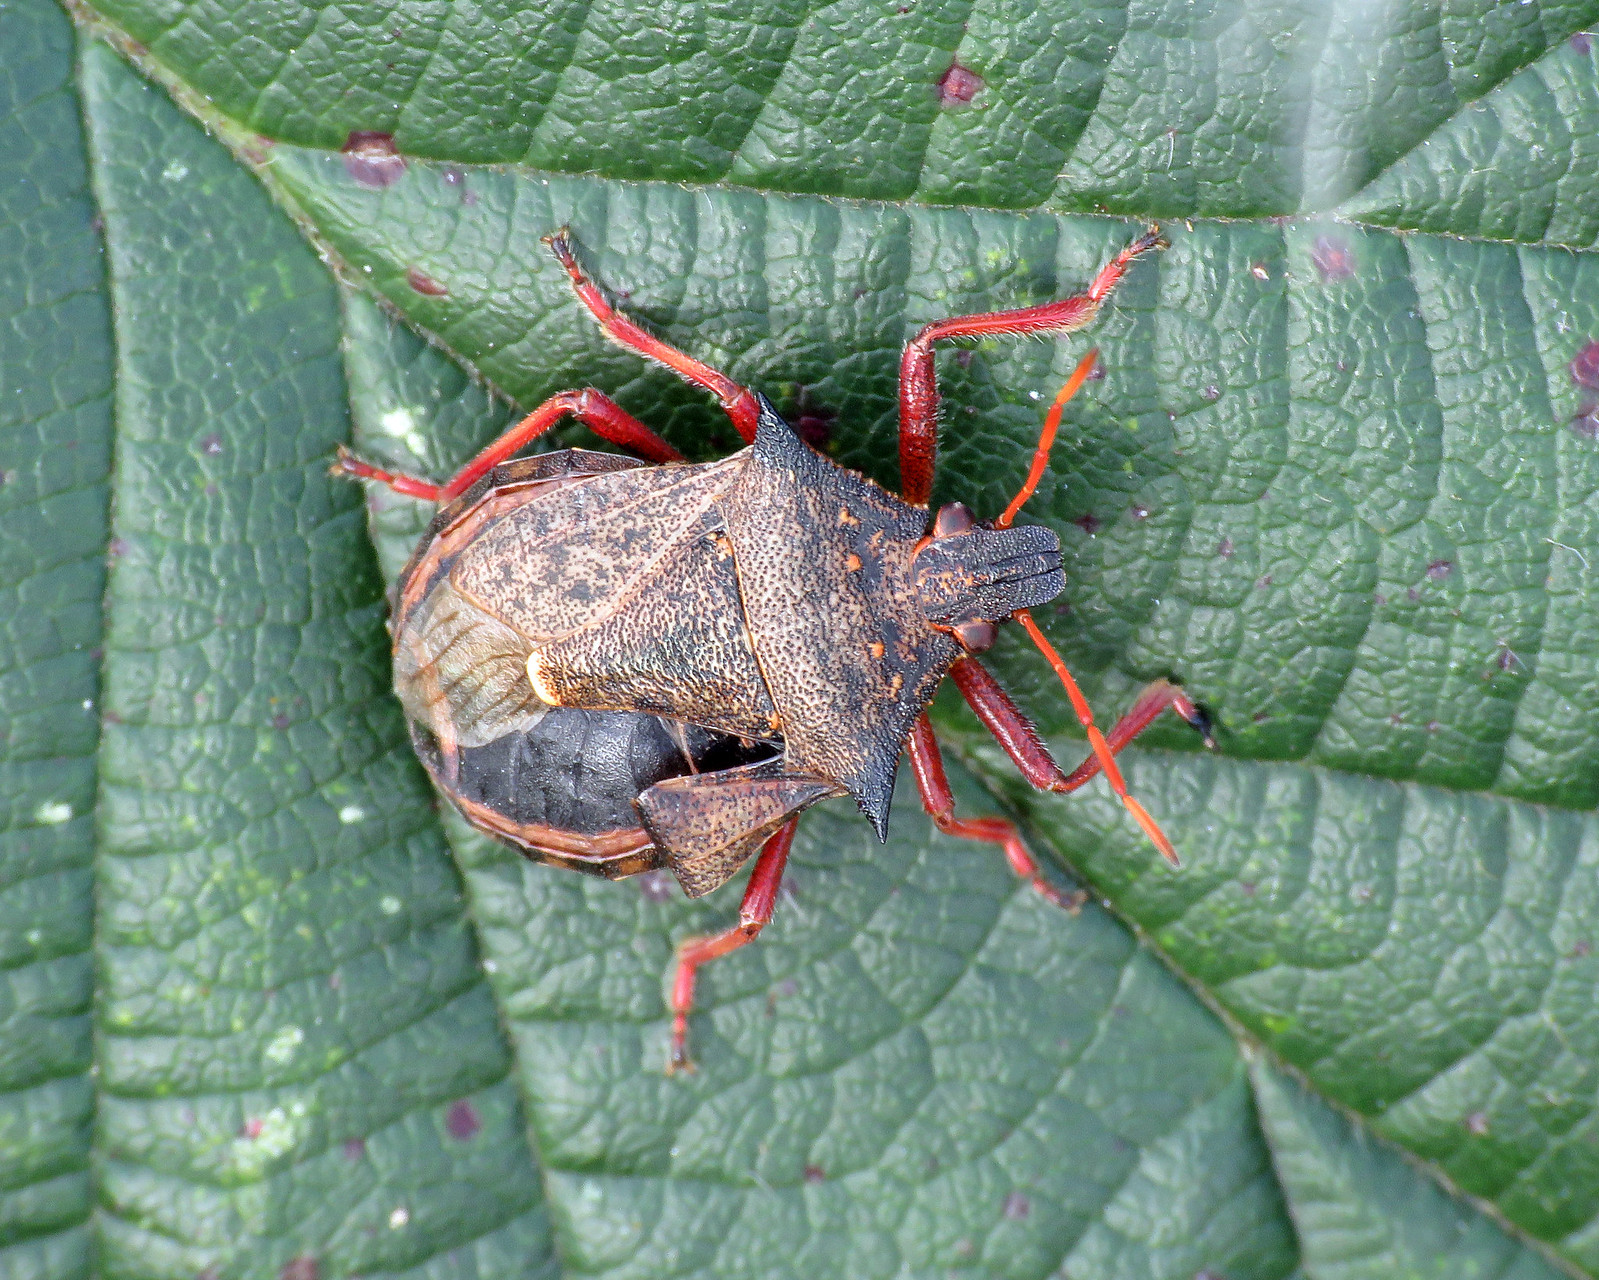 Spiked Shieldbug - Picromerus bidens